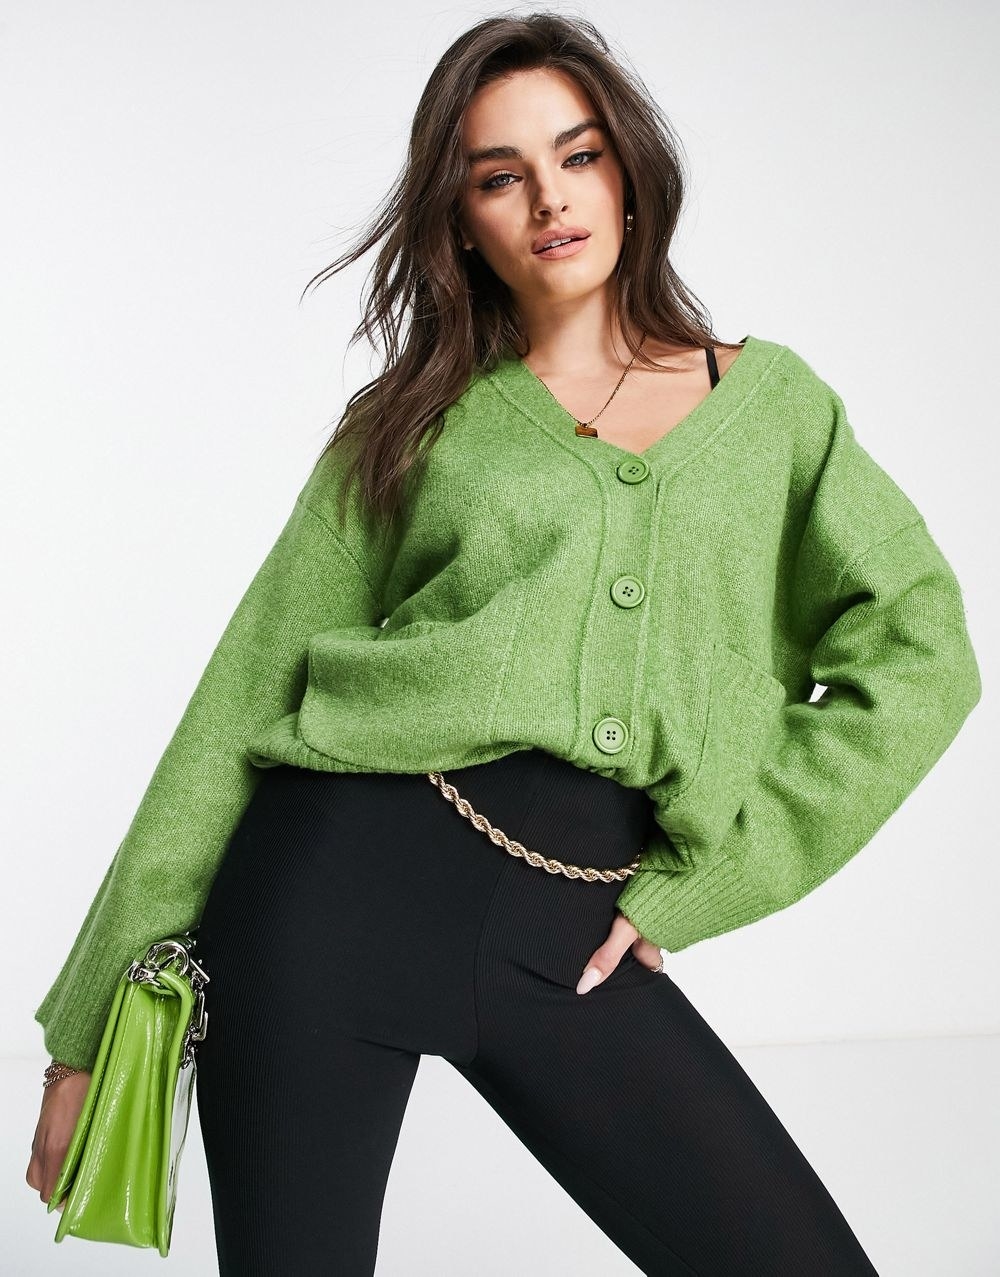 model wearing the cardigan in green